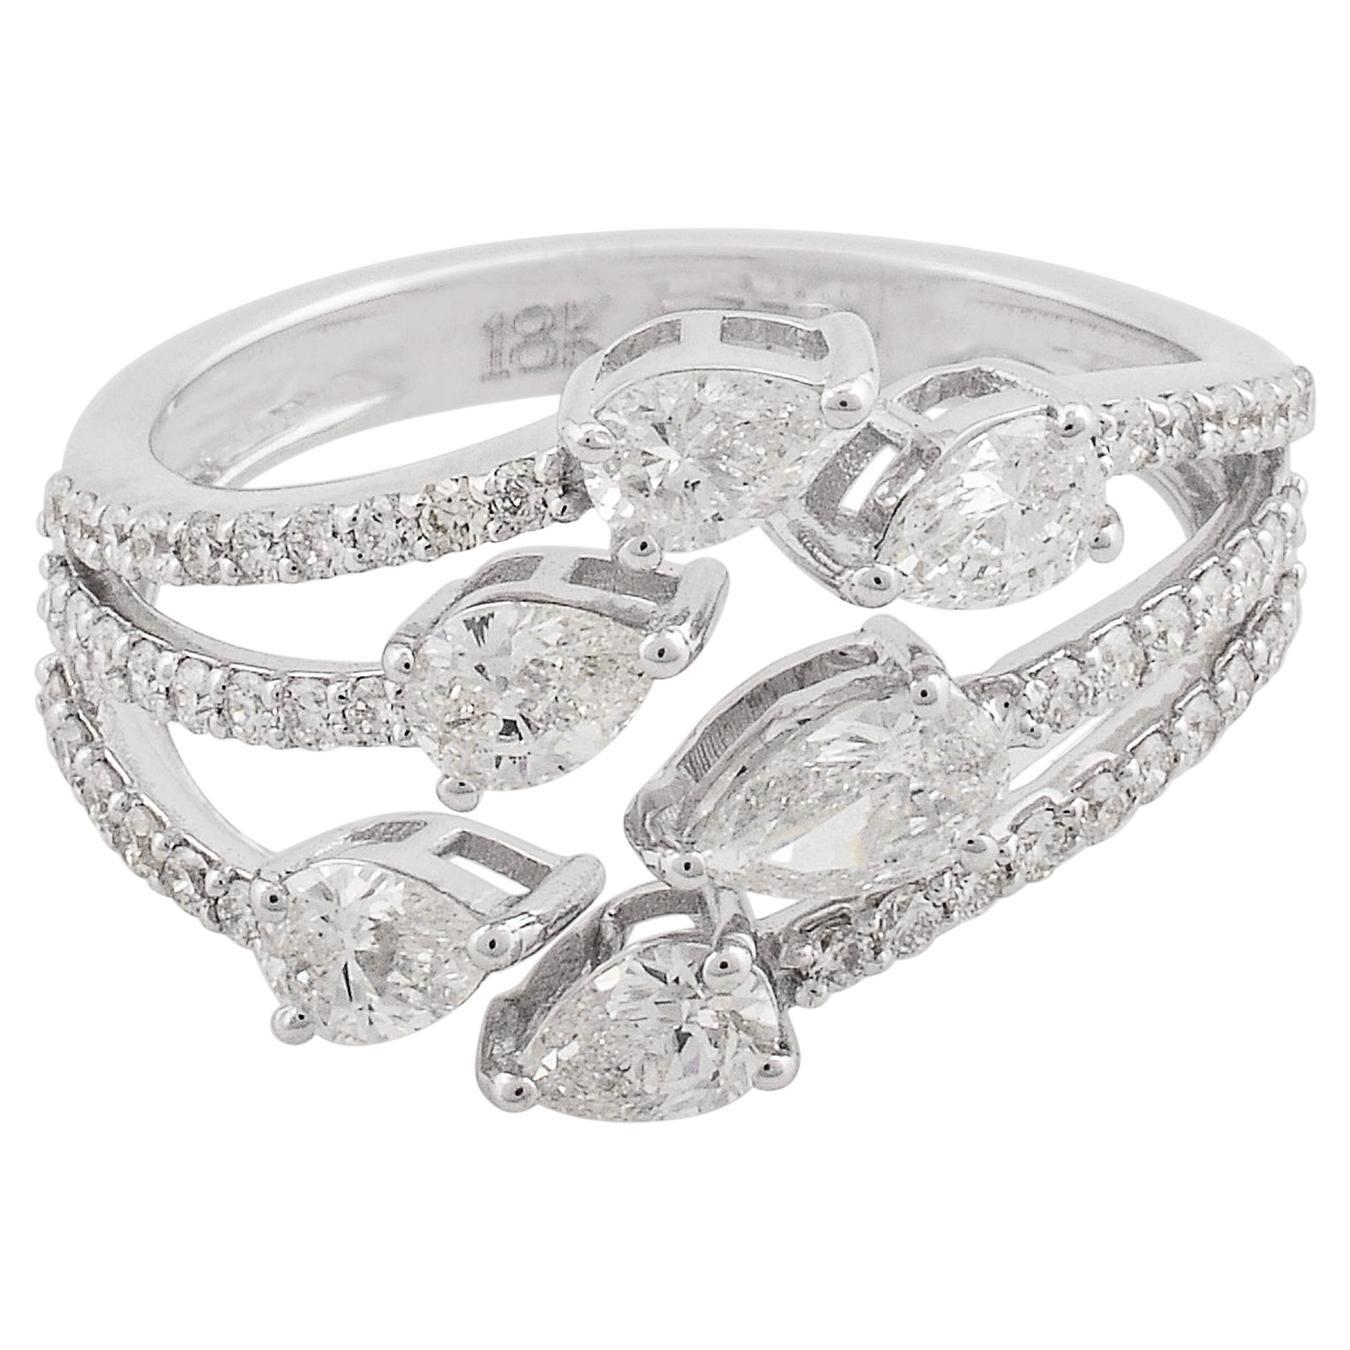 For Sale:  1.3 Carat SI Clarity HI Color Pear Diamond Cuff Ring 18 Karat White Gold Jewelry